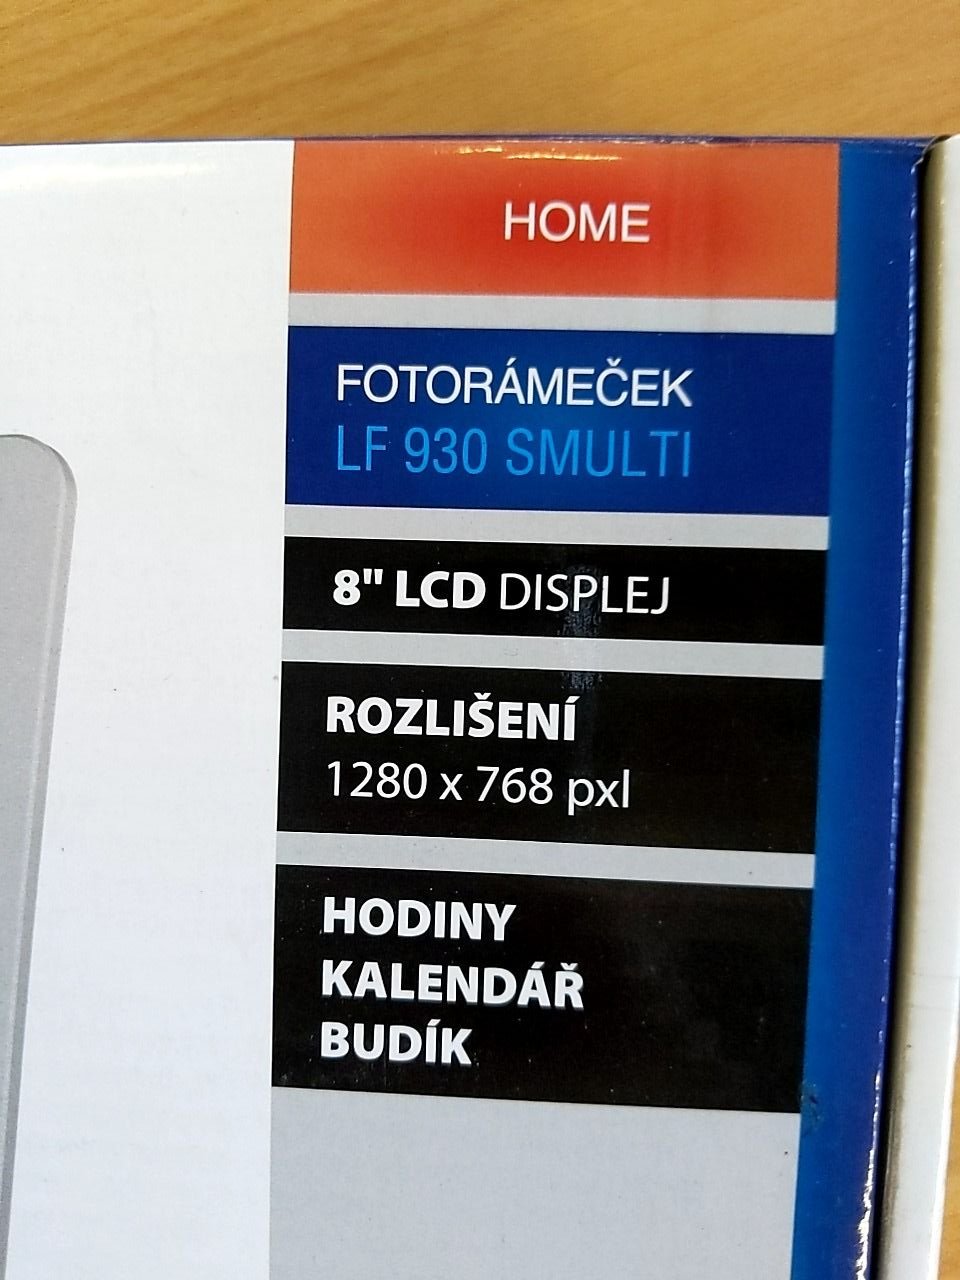 Fotorámeček digitální Hyundai LF 930 S MULTI, 8" displej, SD/MMC, USB, stříbrný